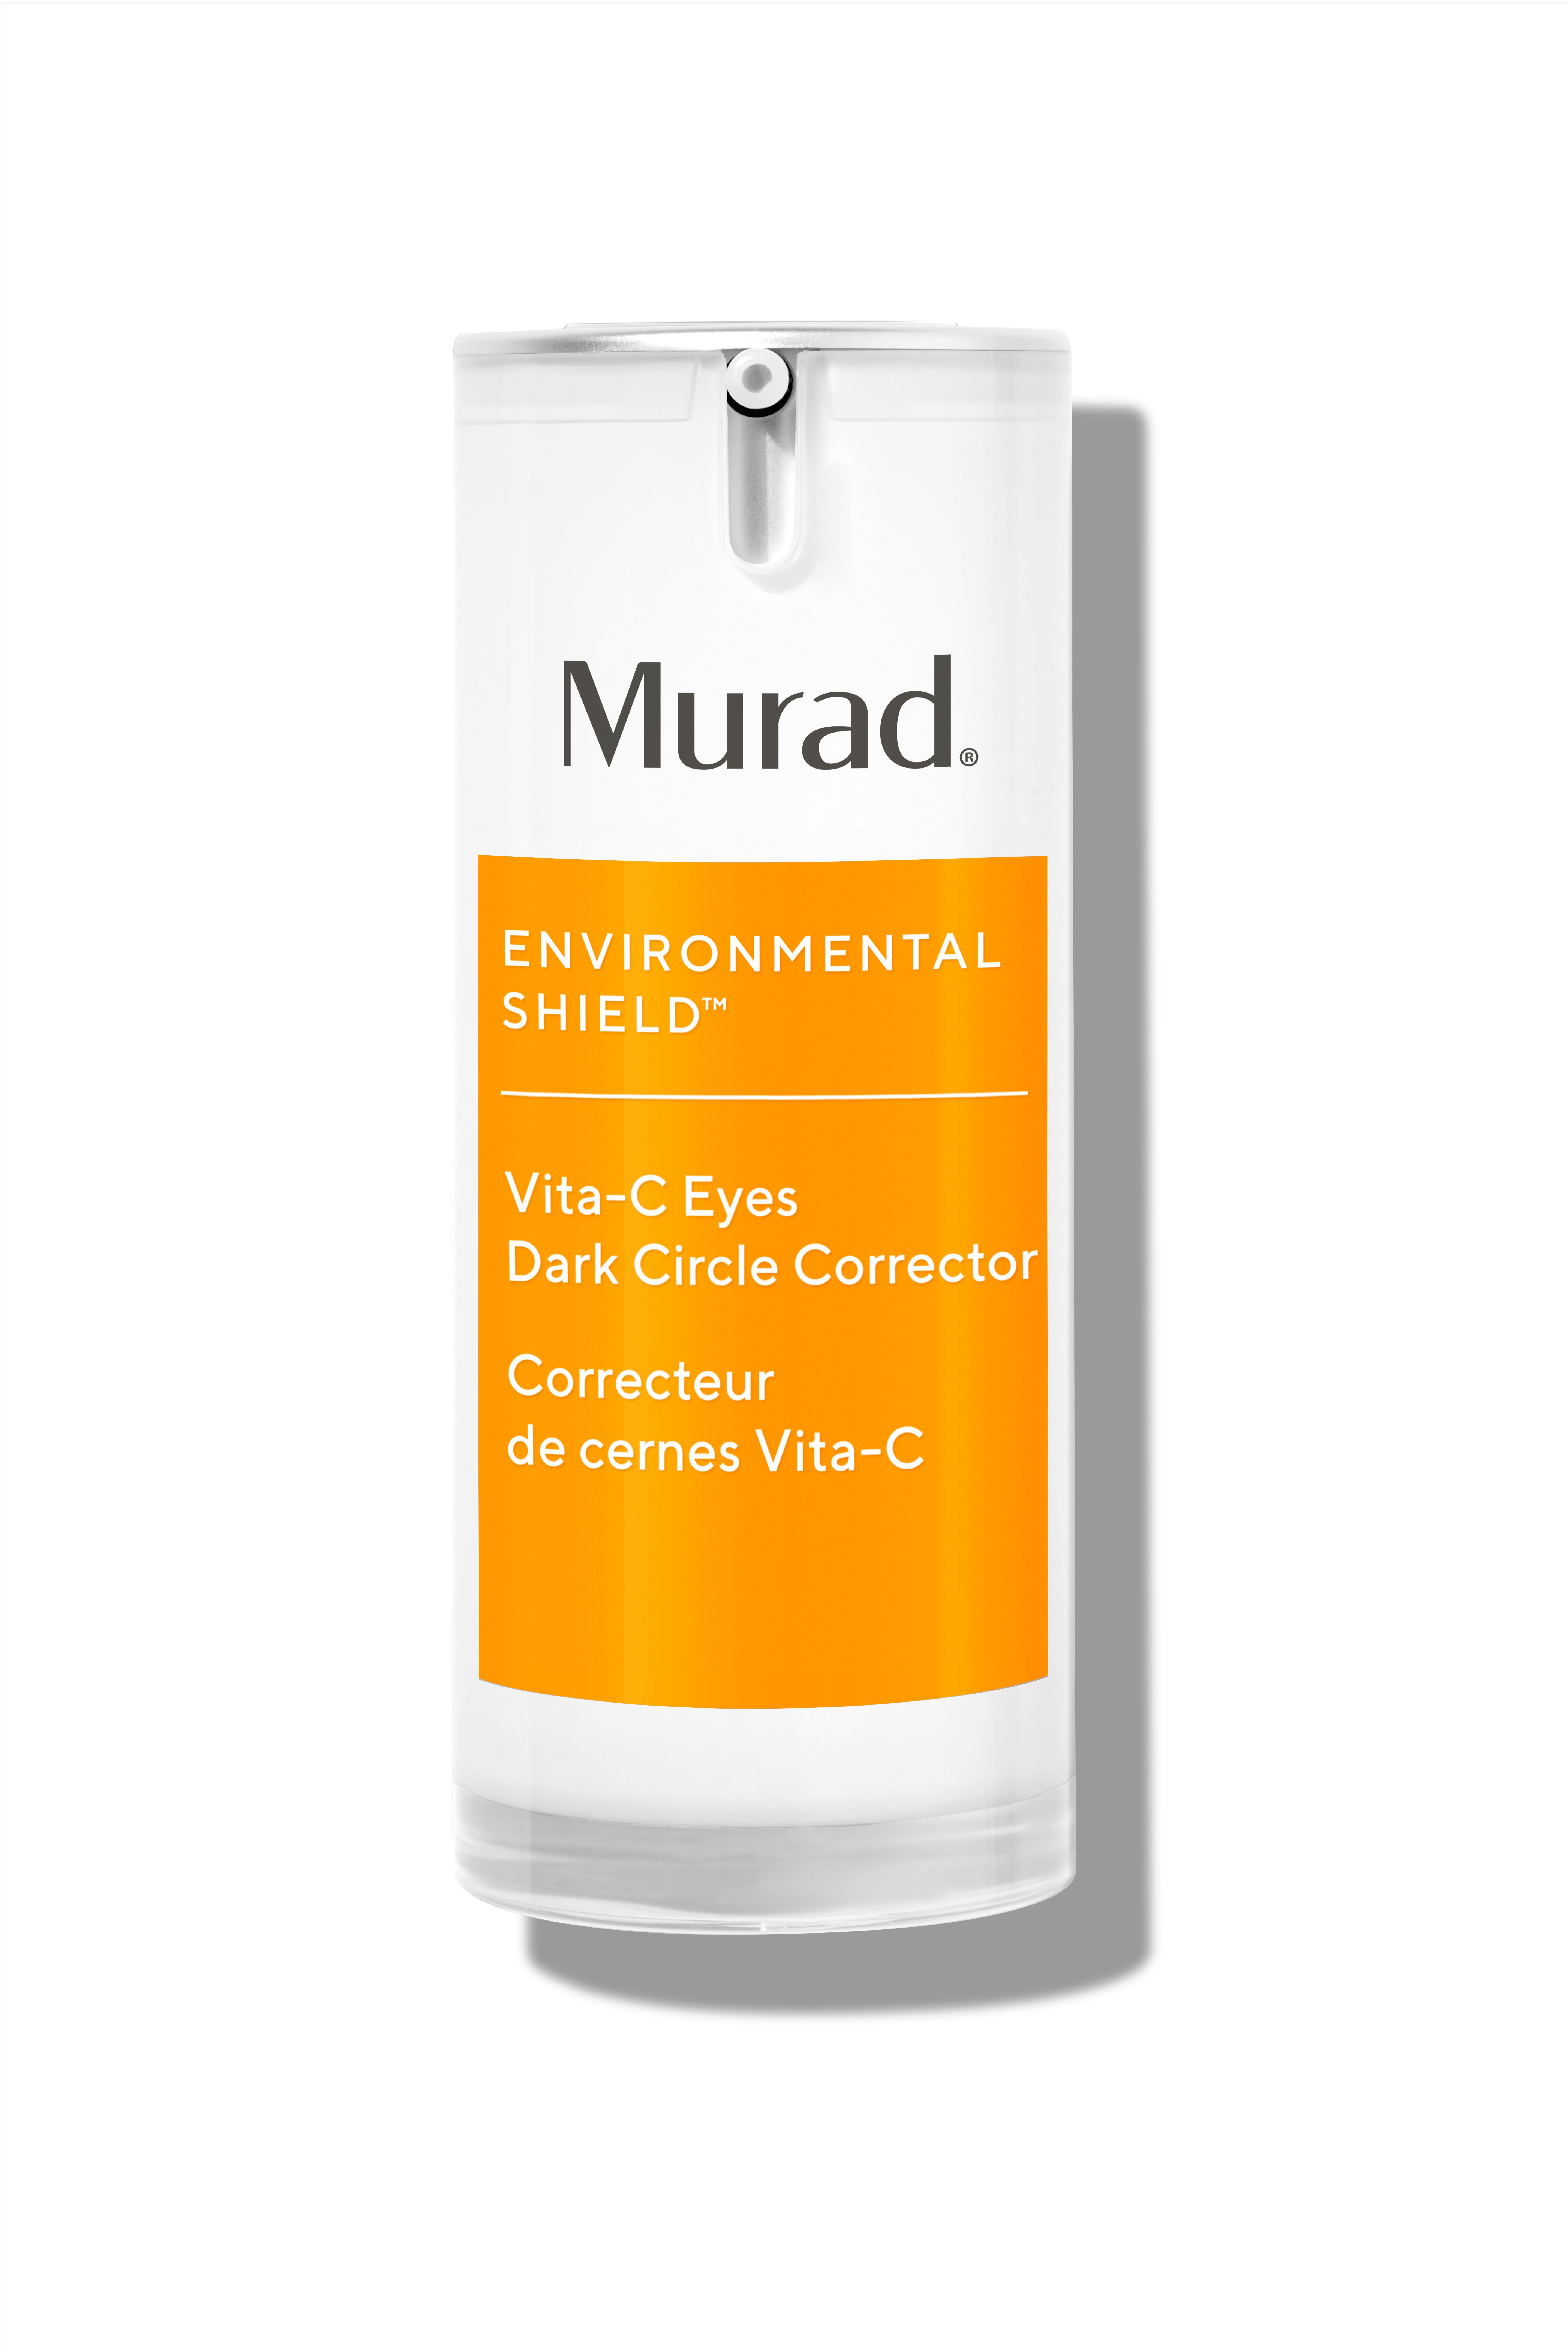 Billede af Murad Environmental Shield Vita-C Eyes Dark Circle Corrector 15 ml.